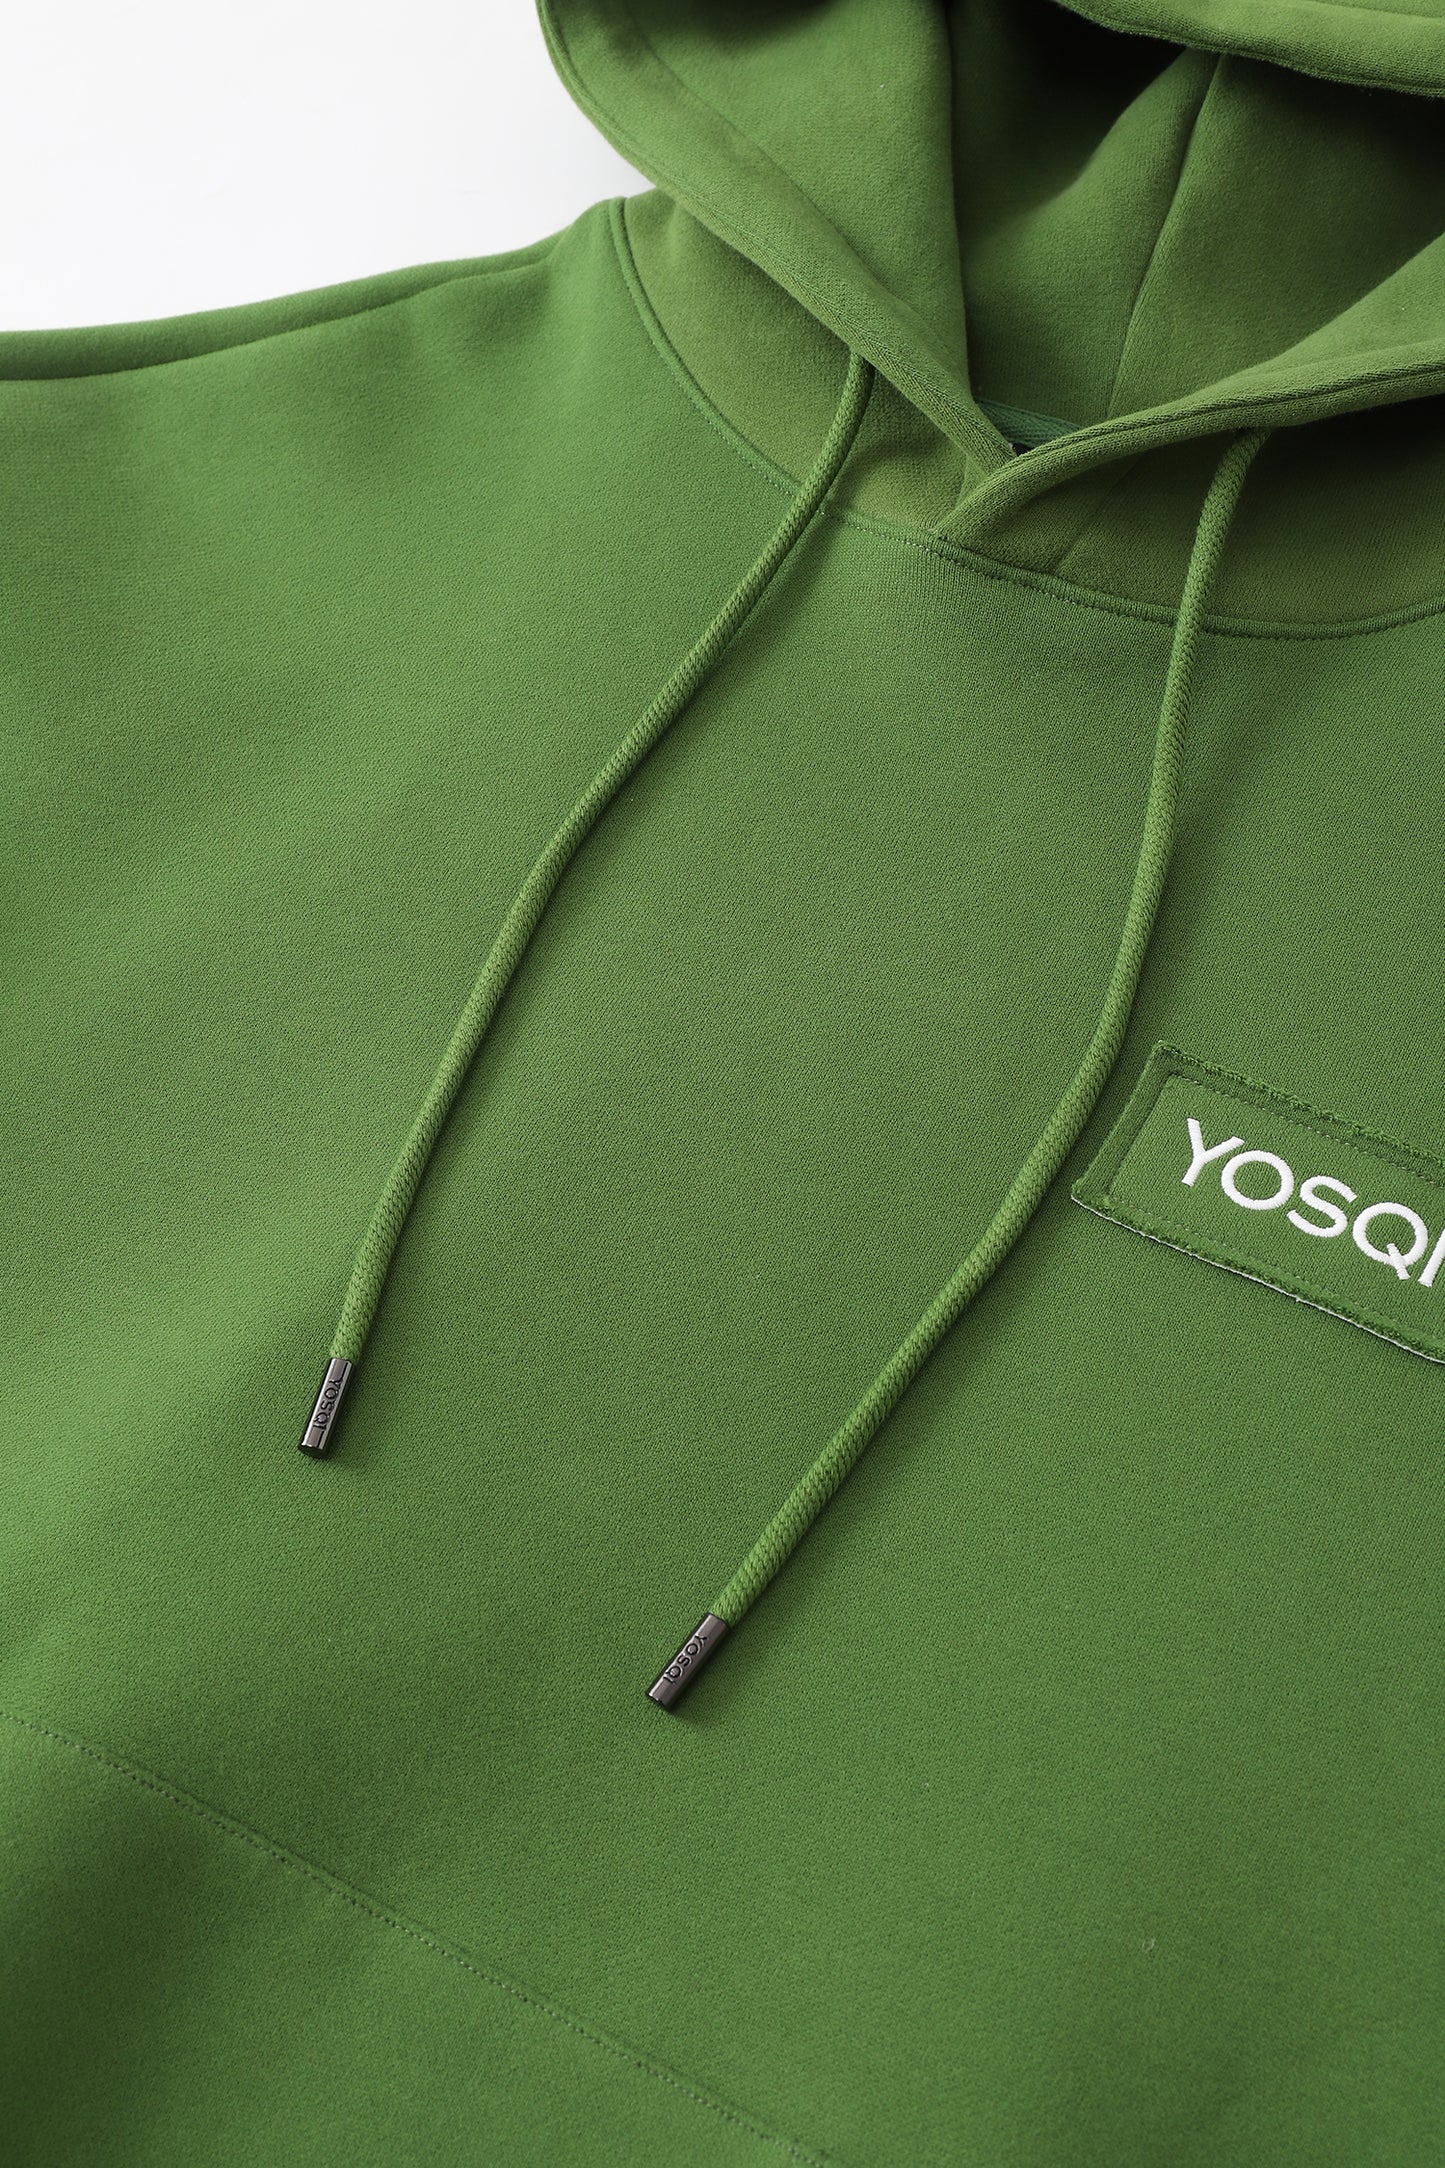 YOSQI Classic Logo Patch Oversized Green Hoodie